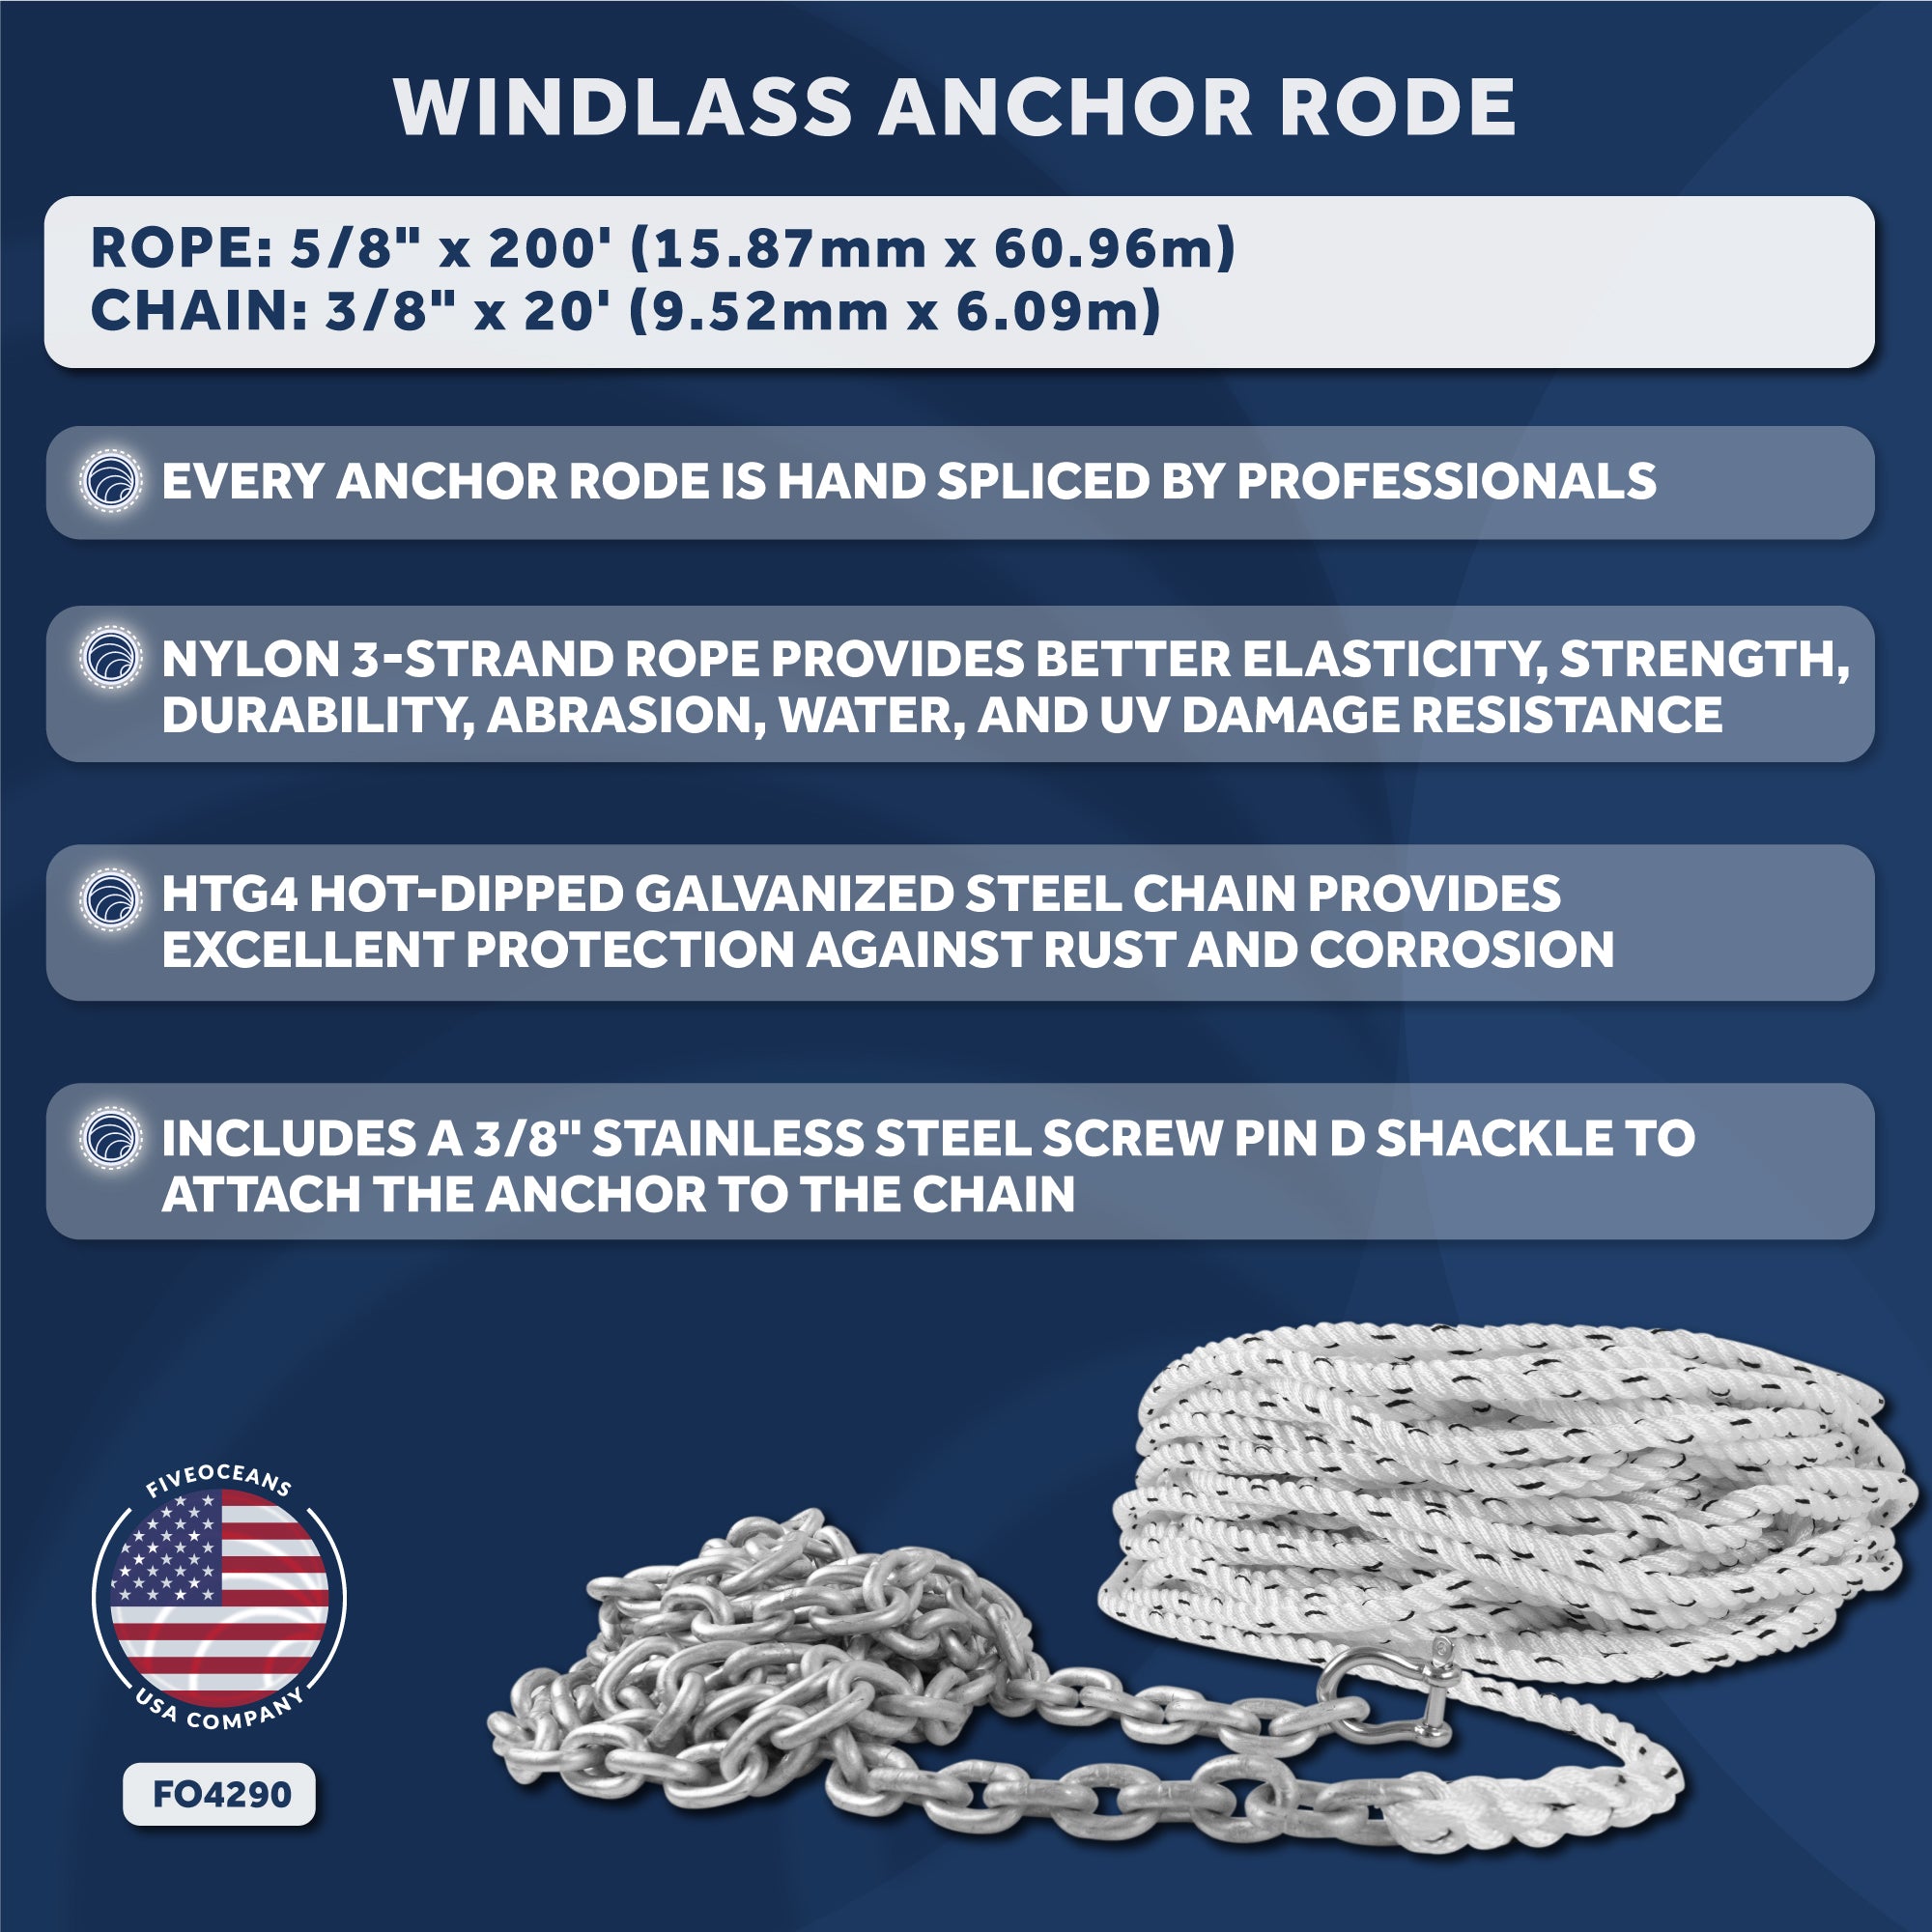 Windlass Anchor Rode, 5/8" x 200' Nylon 3-Strand Rope, 3/8" x 20'  G4 Hot-Dipped Galvanized Steel Chain - FO4290